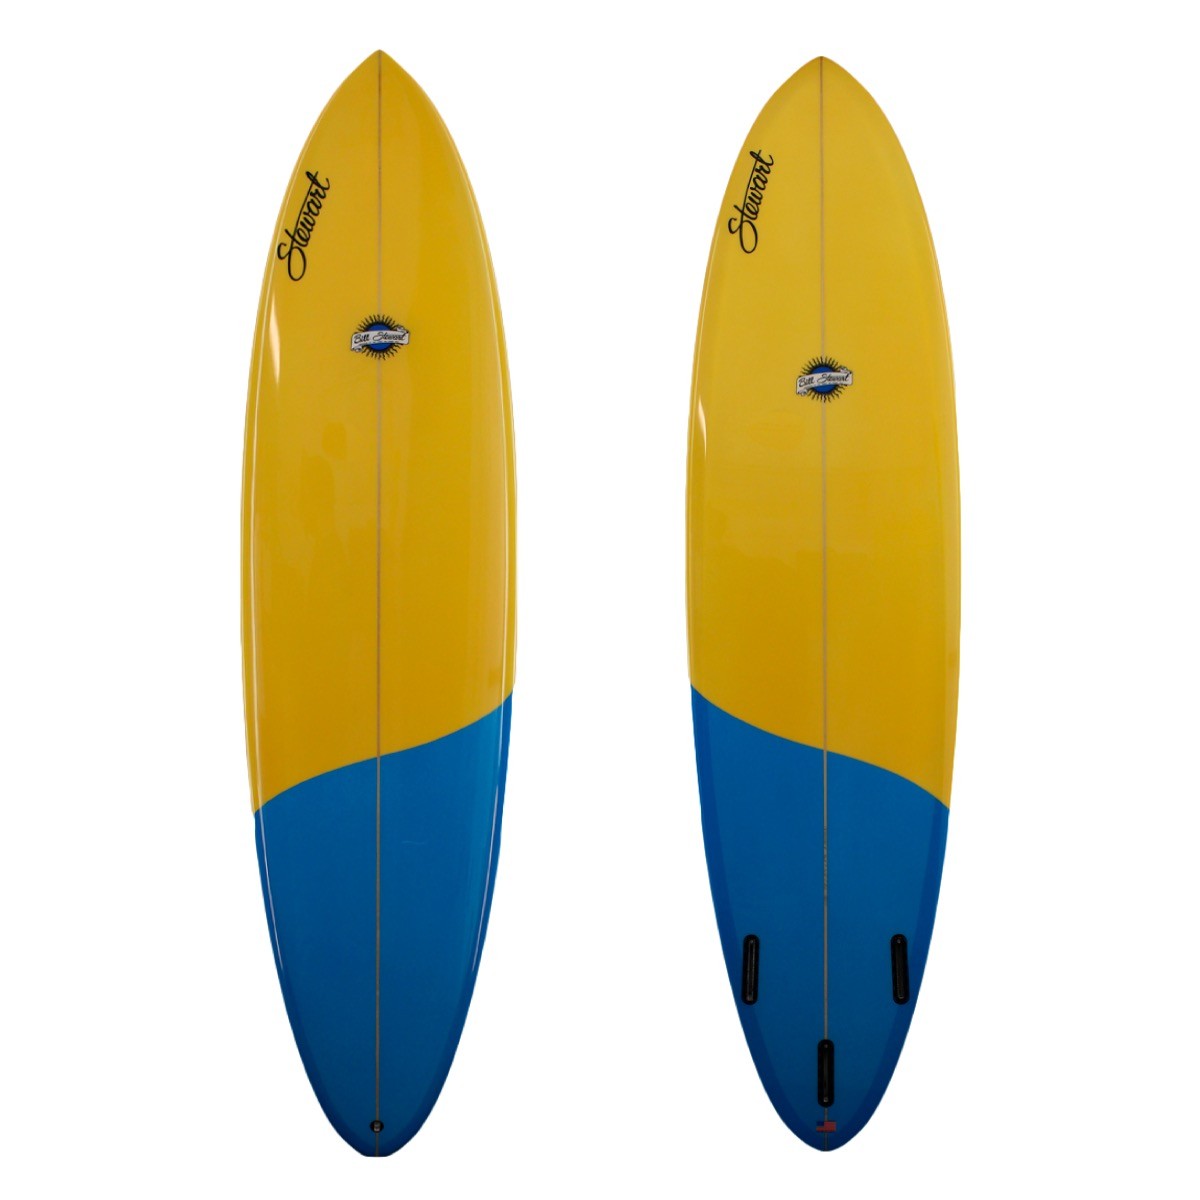 Tablas de surf STEWART - Funboard Comp 7'8 (PU) - Amarillo/Azul